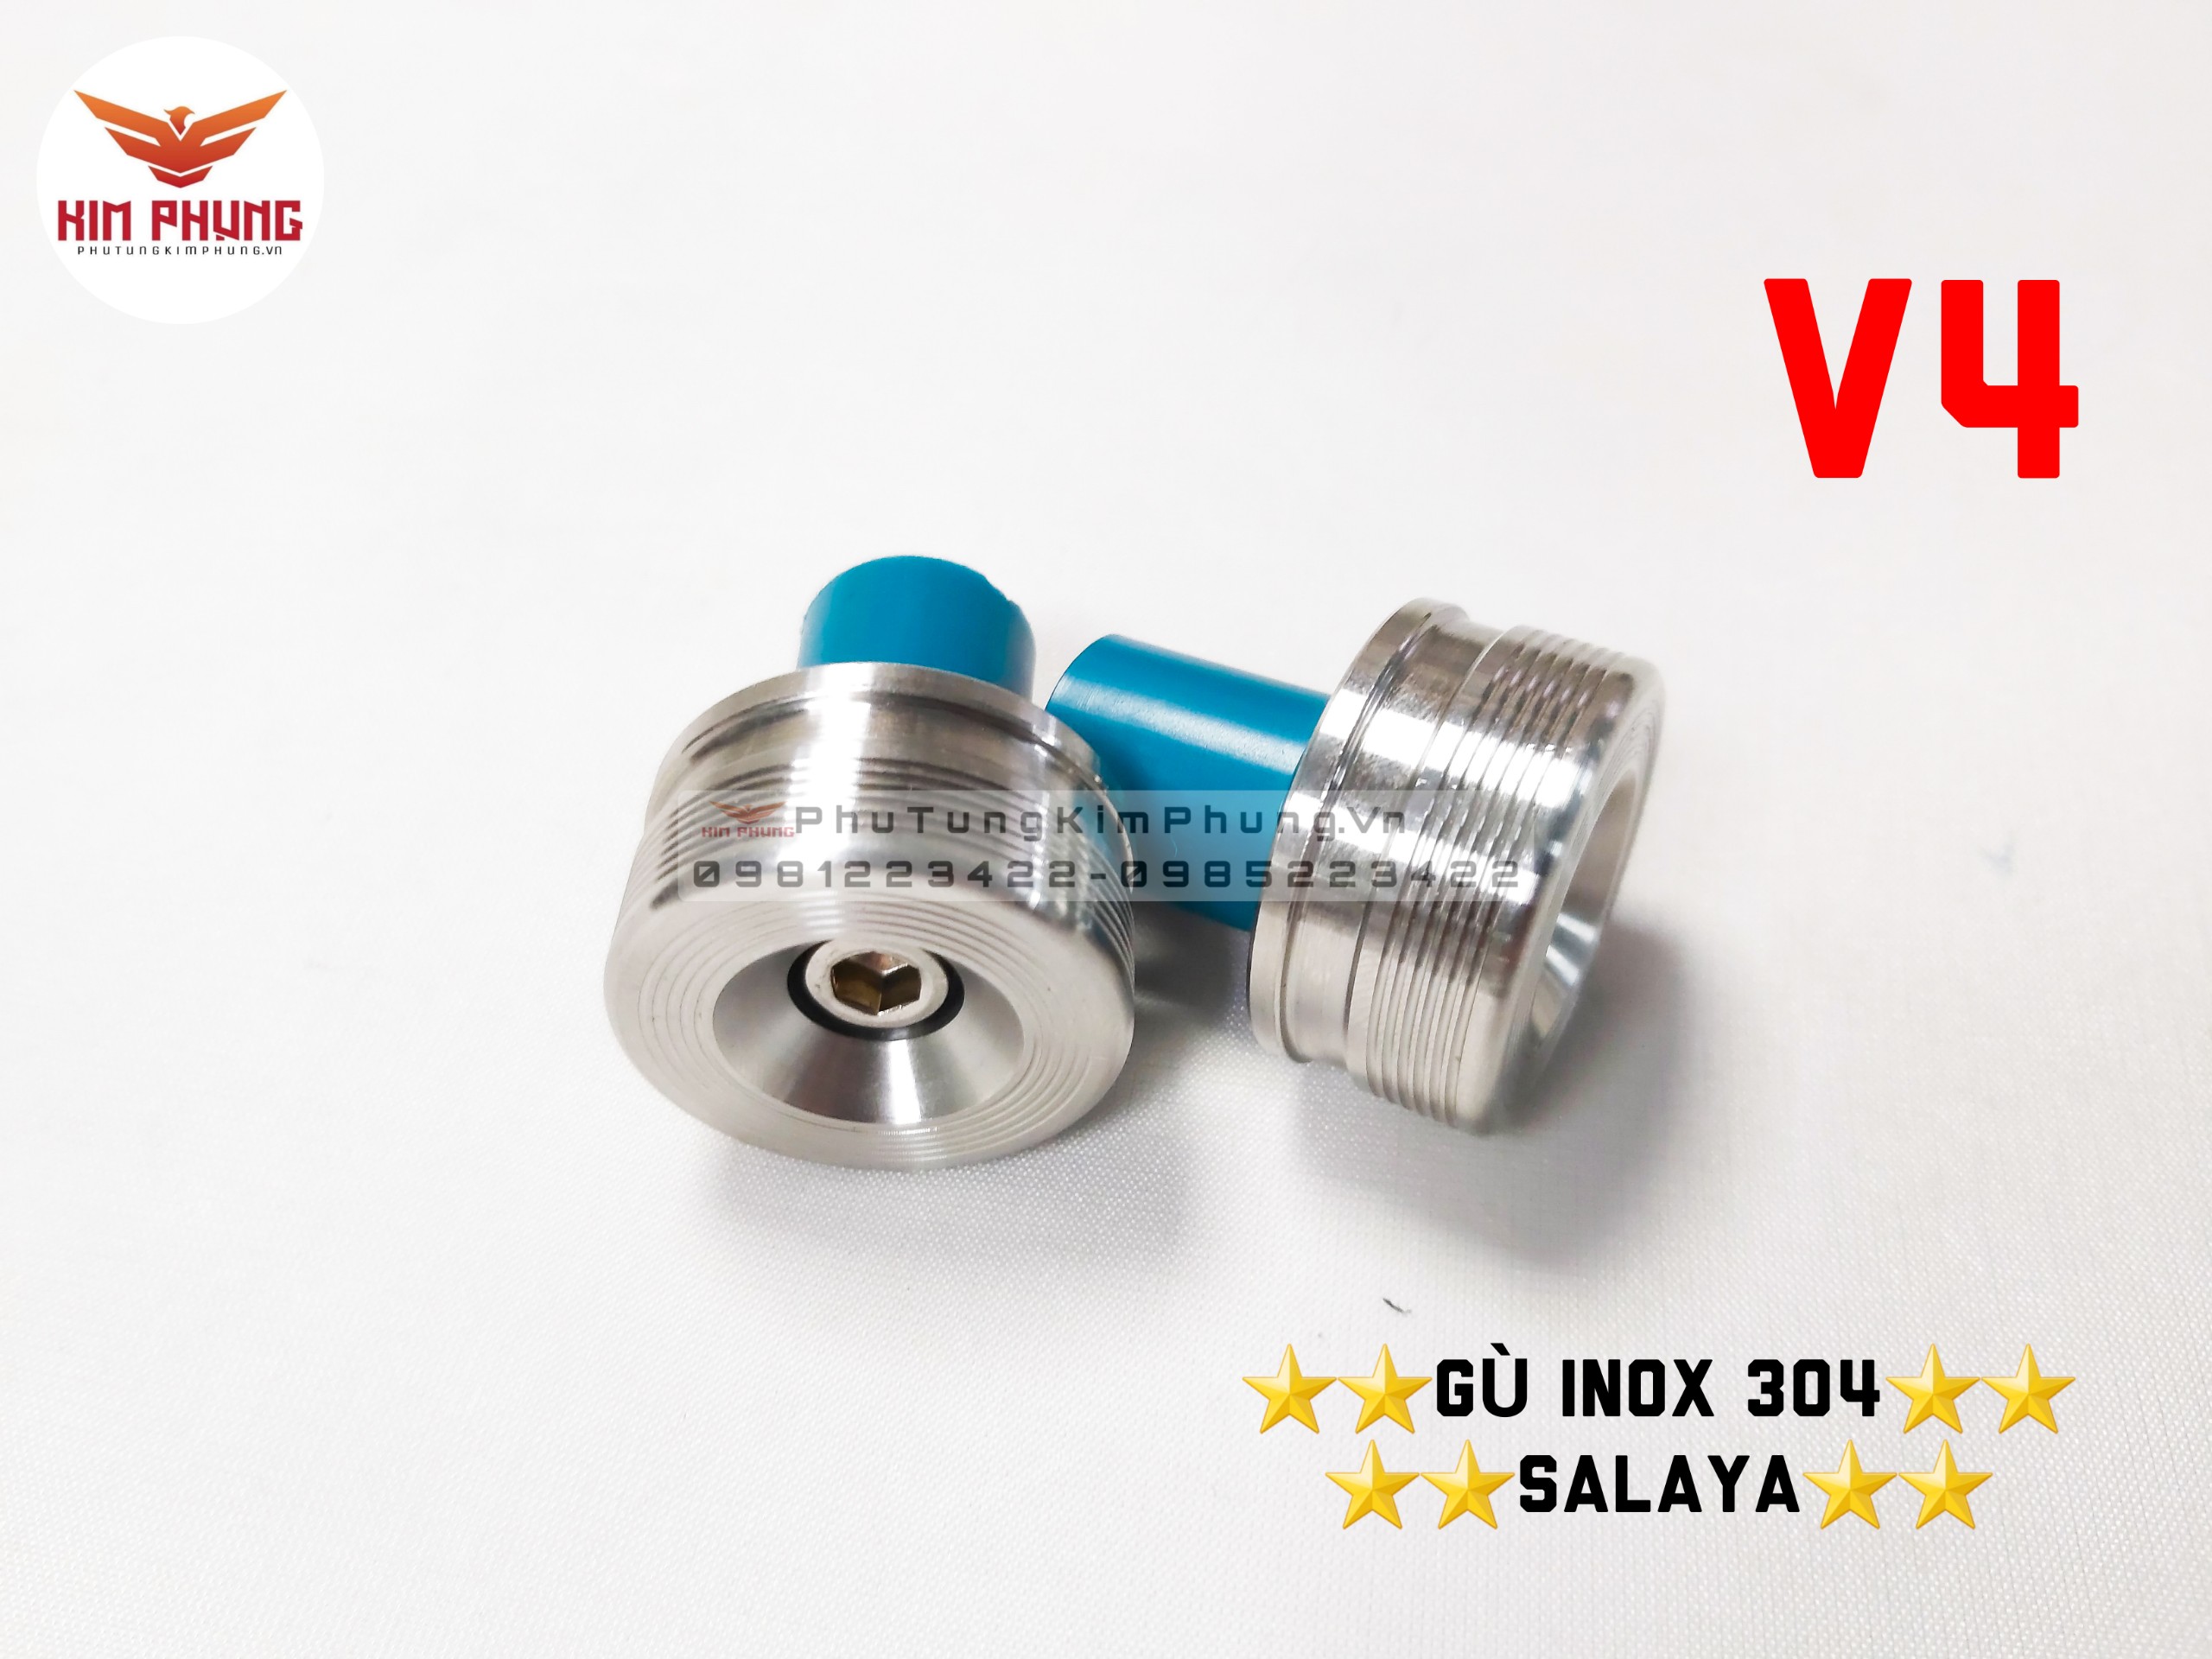 GÙ INOX 304 SALAYA (V4)